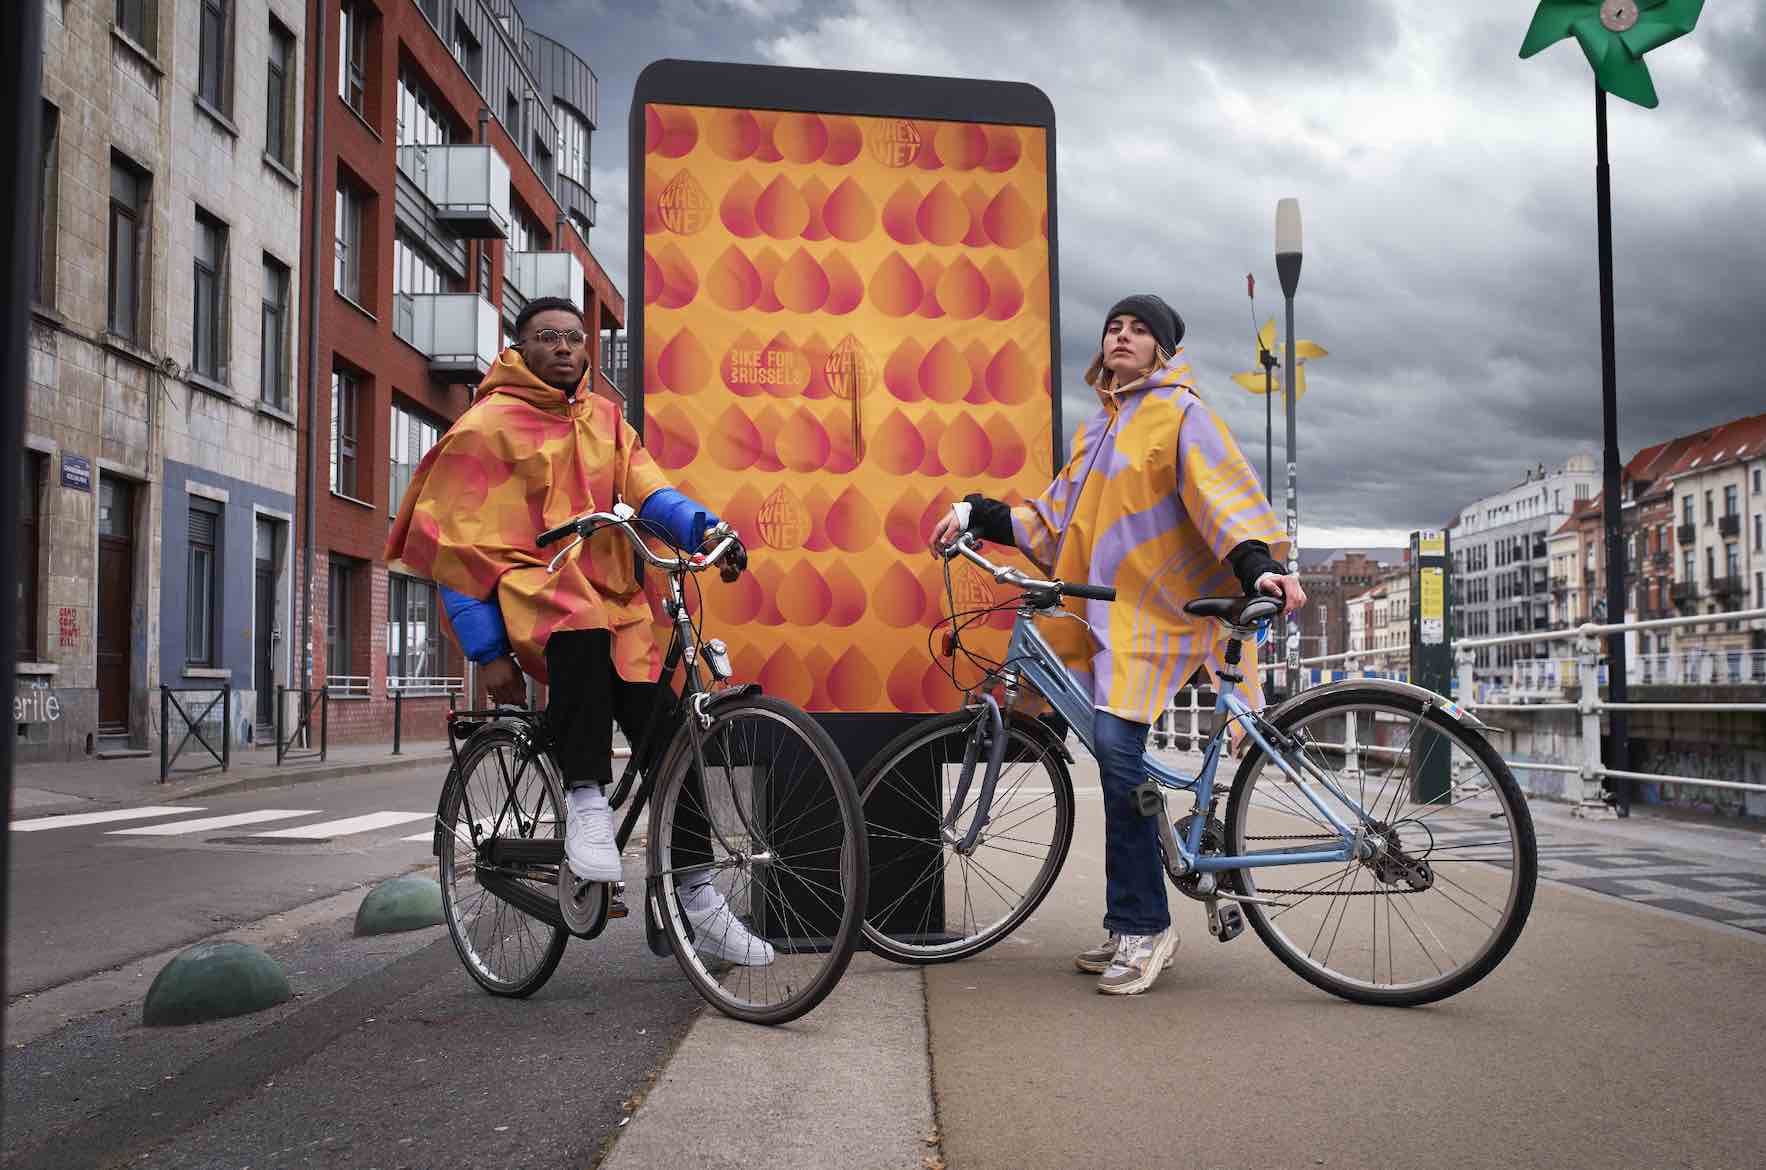 mortierbrigade affiche des ponchos pour Bike For Brussels